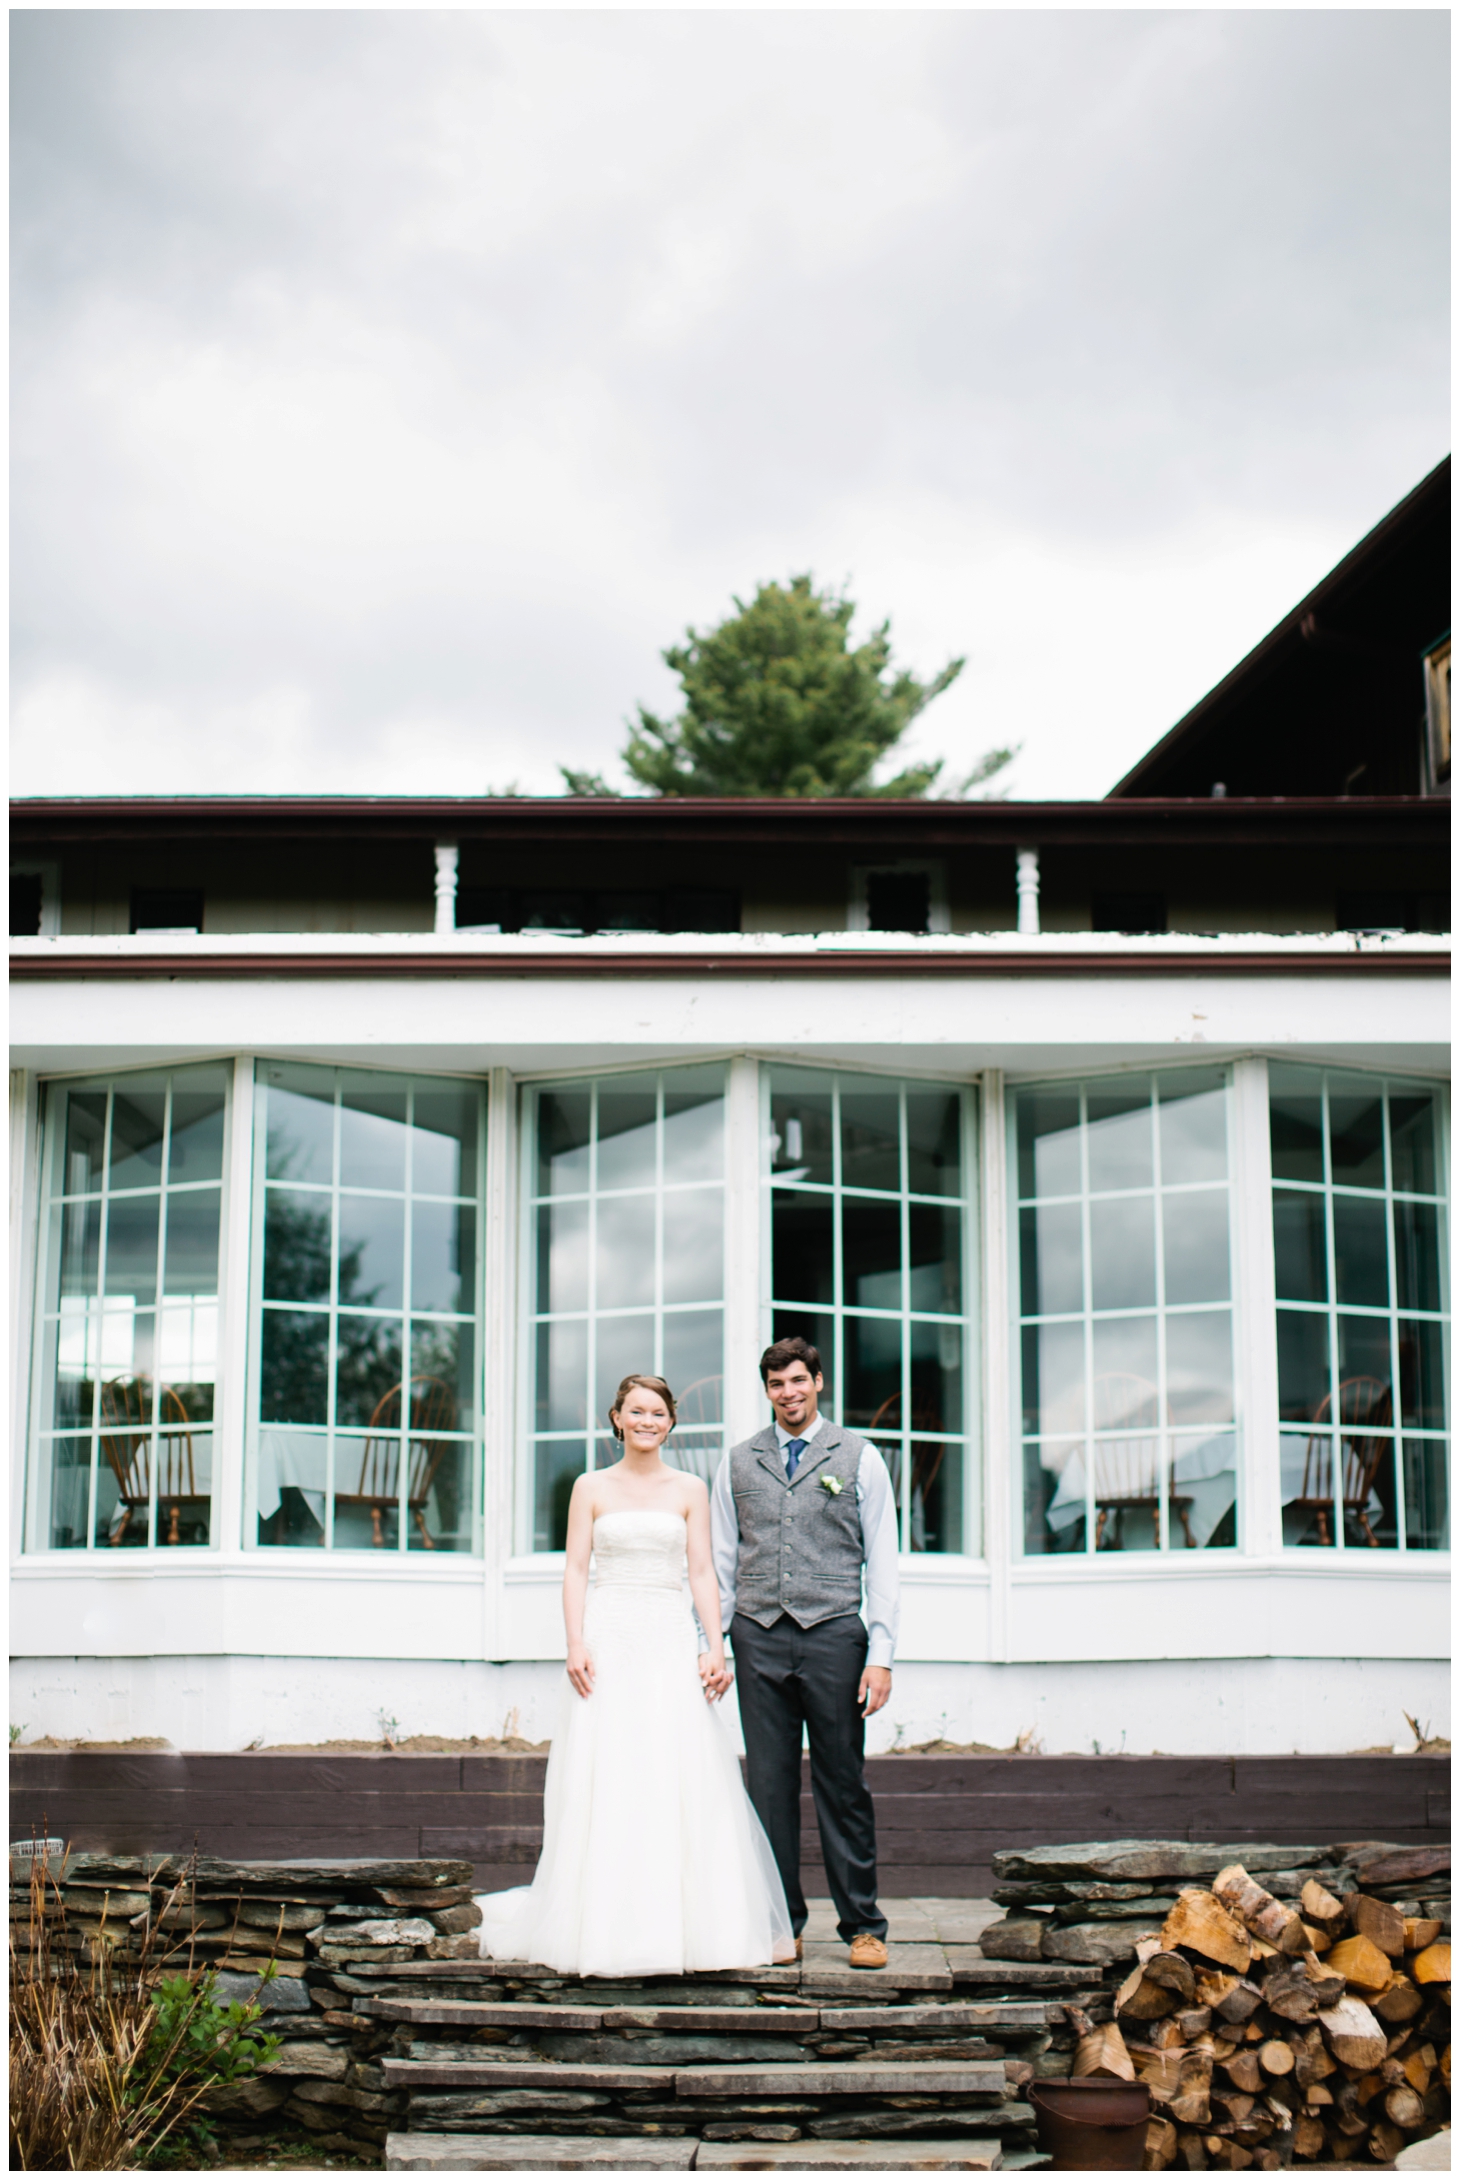 Kris & Christine's Mountain-Inspired Vermont Lodge Wedding - by Sarah Bradshaw Photography_0025